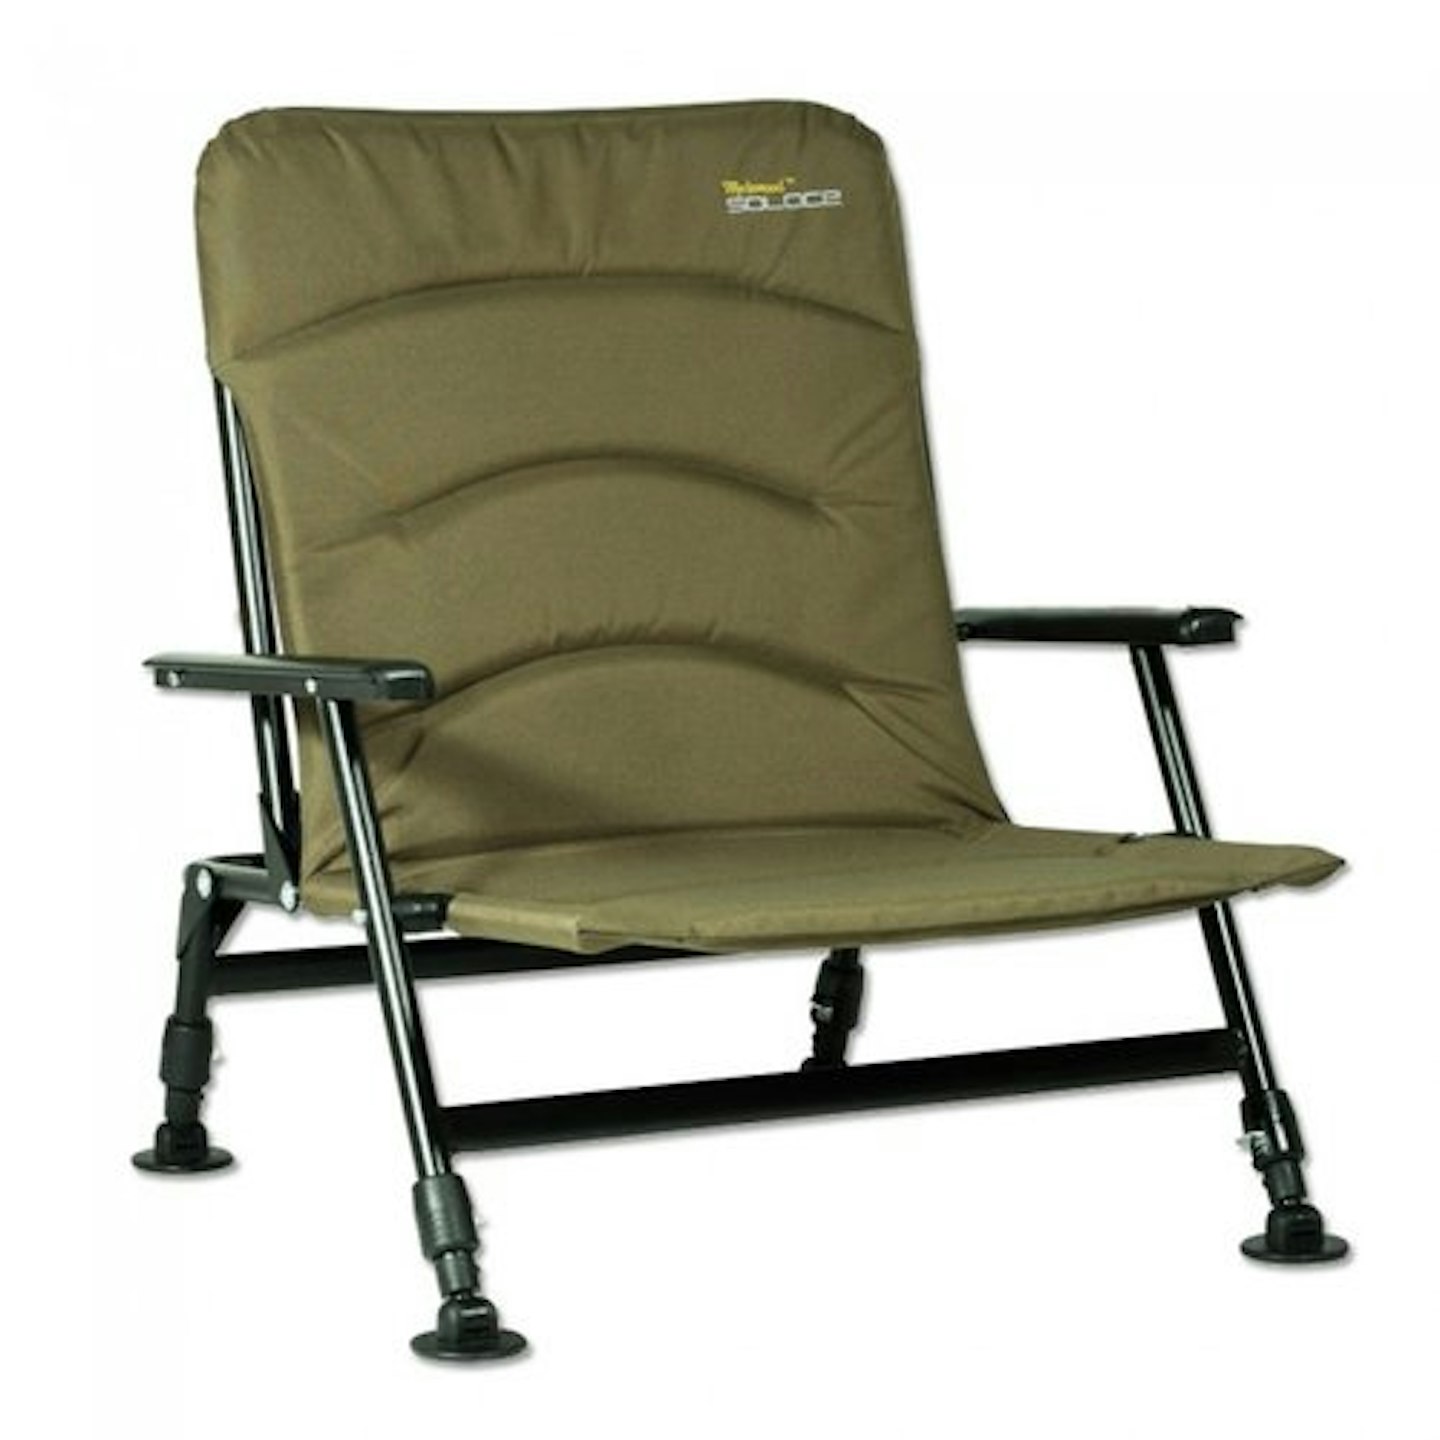 Wychwood-solace-comforter-low-leg-chair_1.jpg 